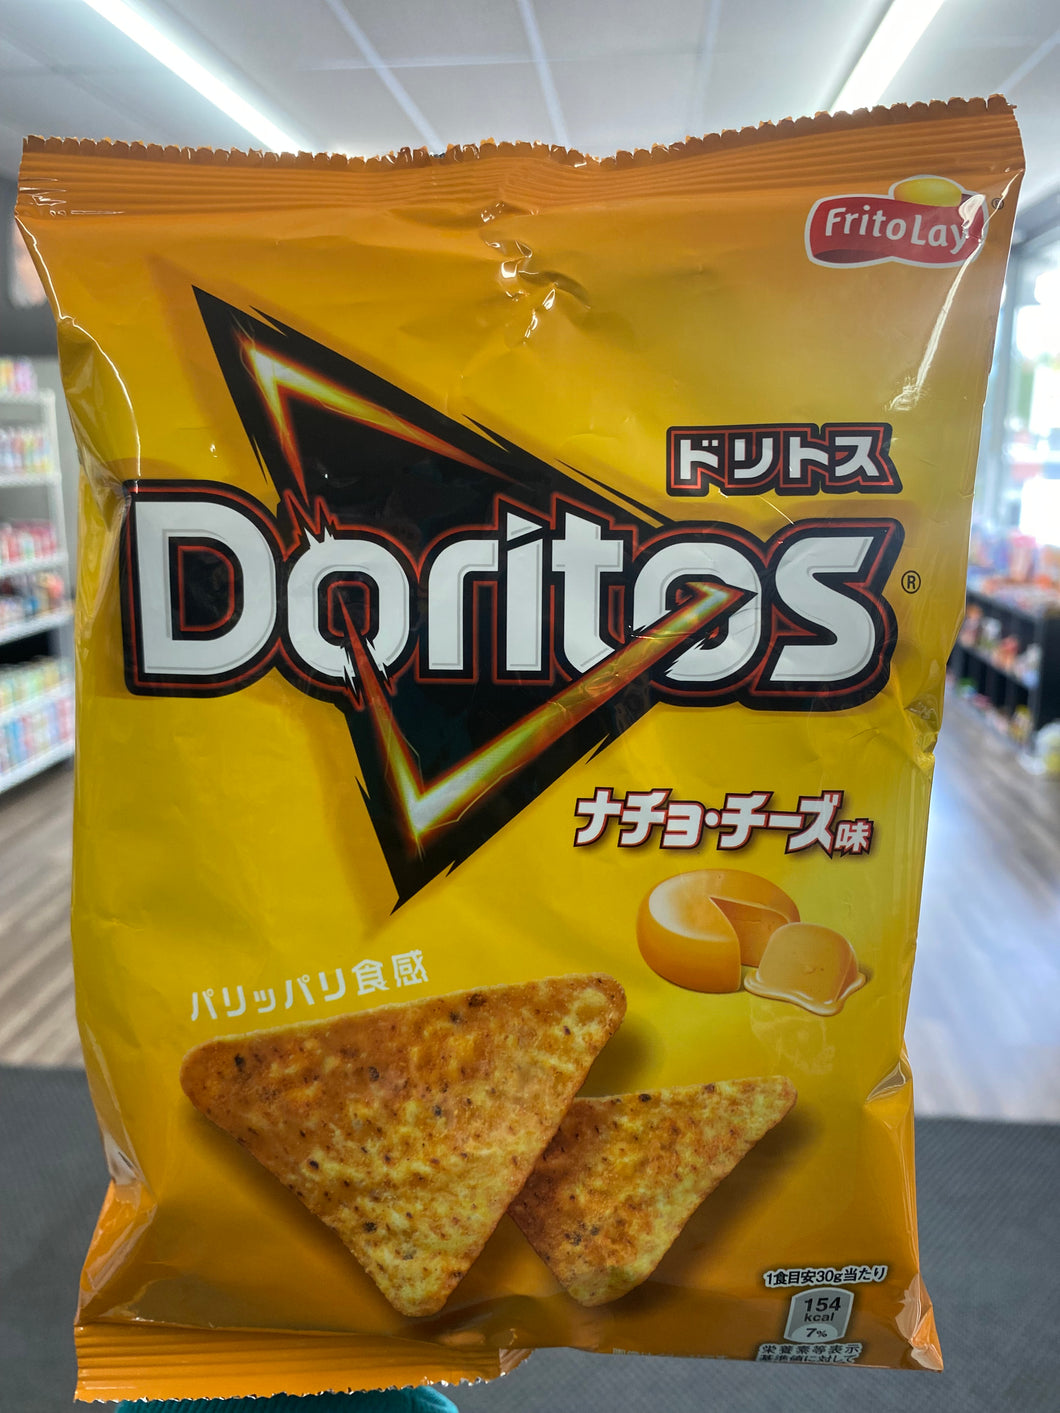 FritoLay Doritos Toasted Corn (Japan)